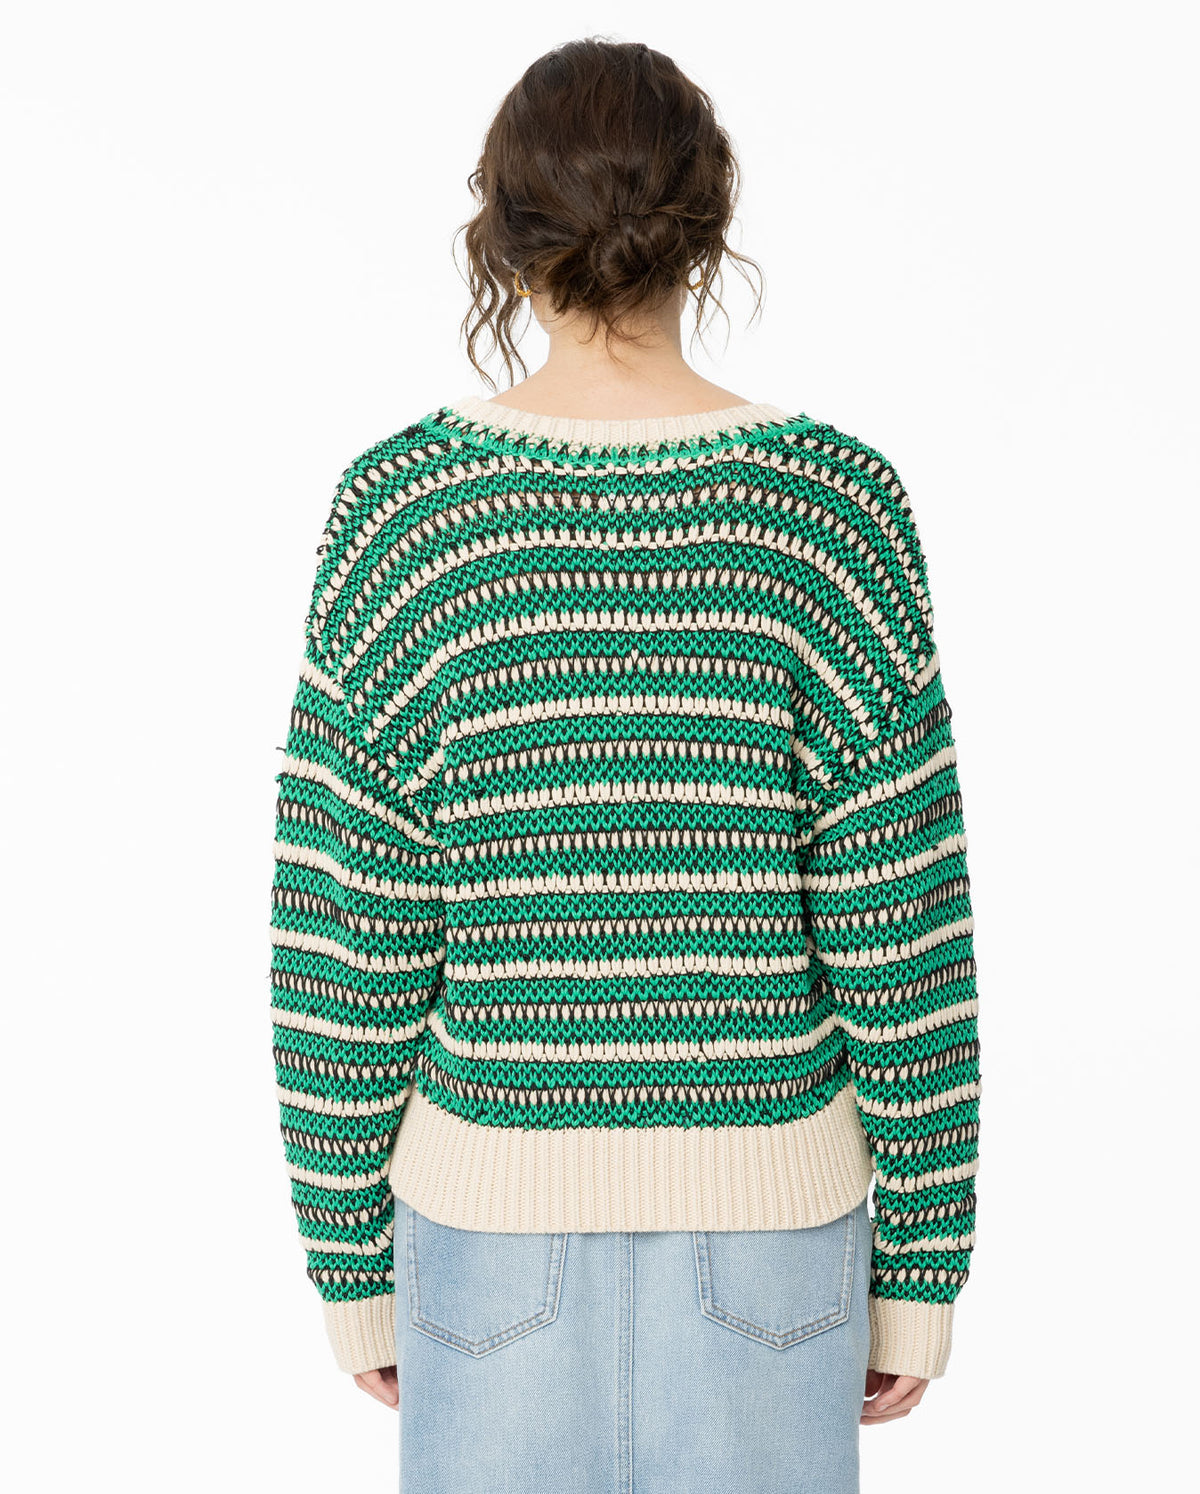 Hilo Summer Knit - Mint Green